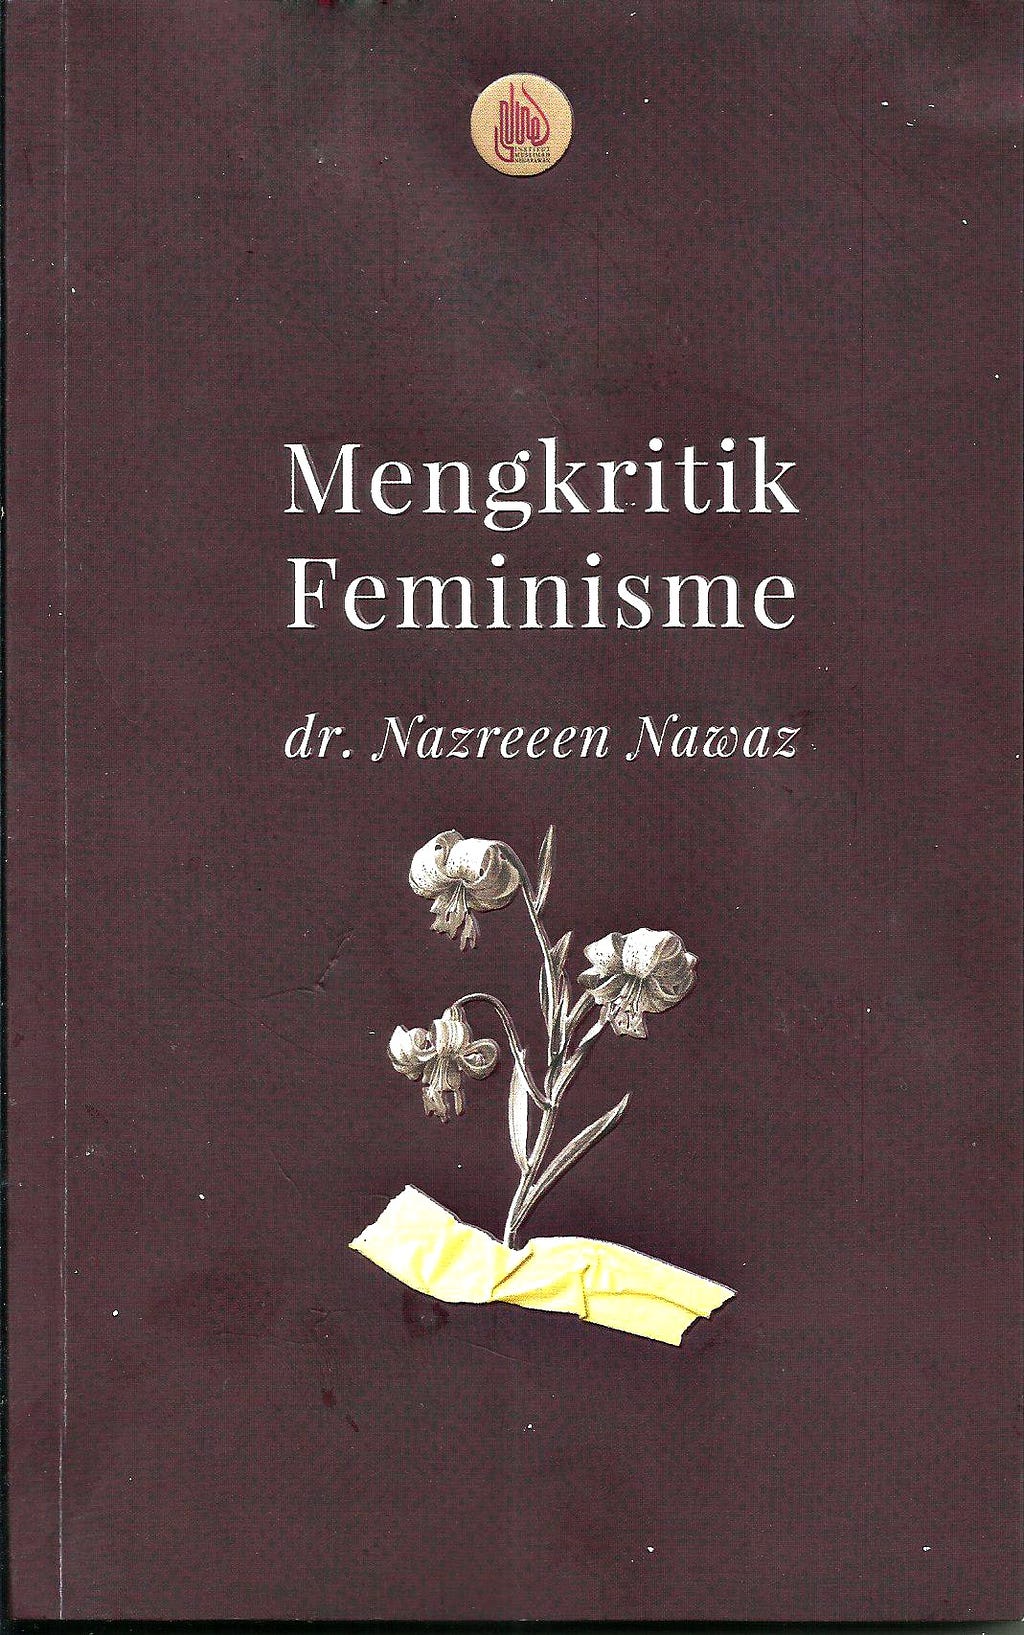 cover book Mengkritik Feminisme oleh dr. Nazreeen Nawaz